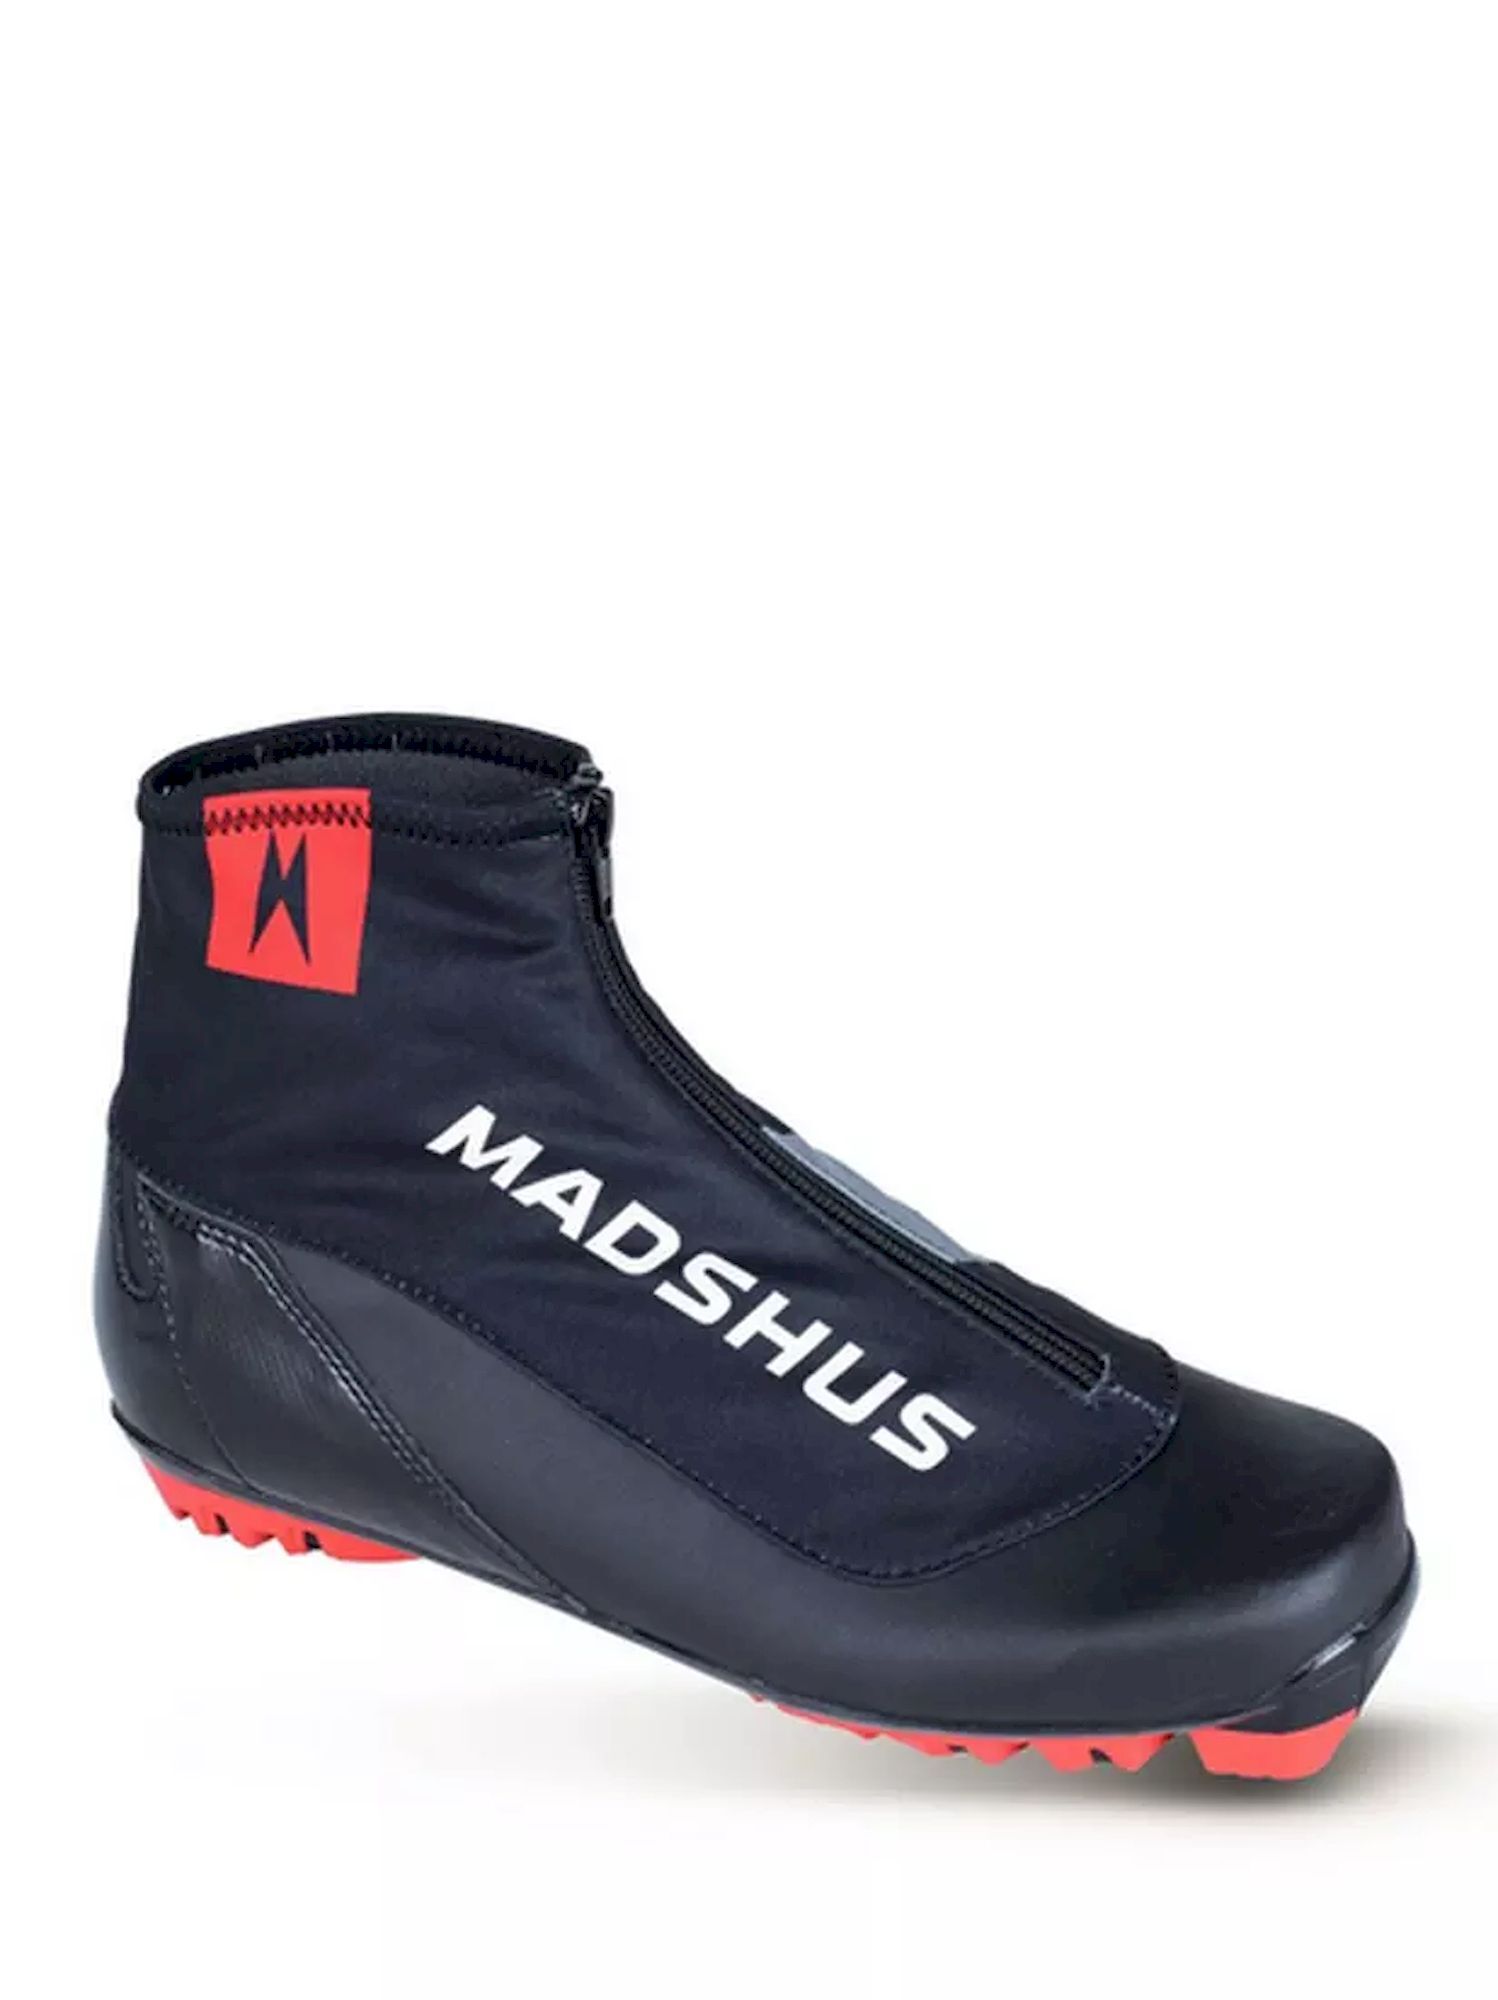 Madshus Endurace Classic - Langlaufschoenen | Hardloop